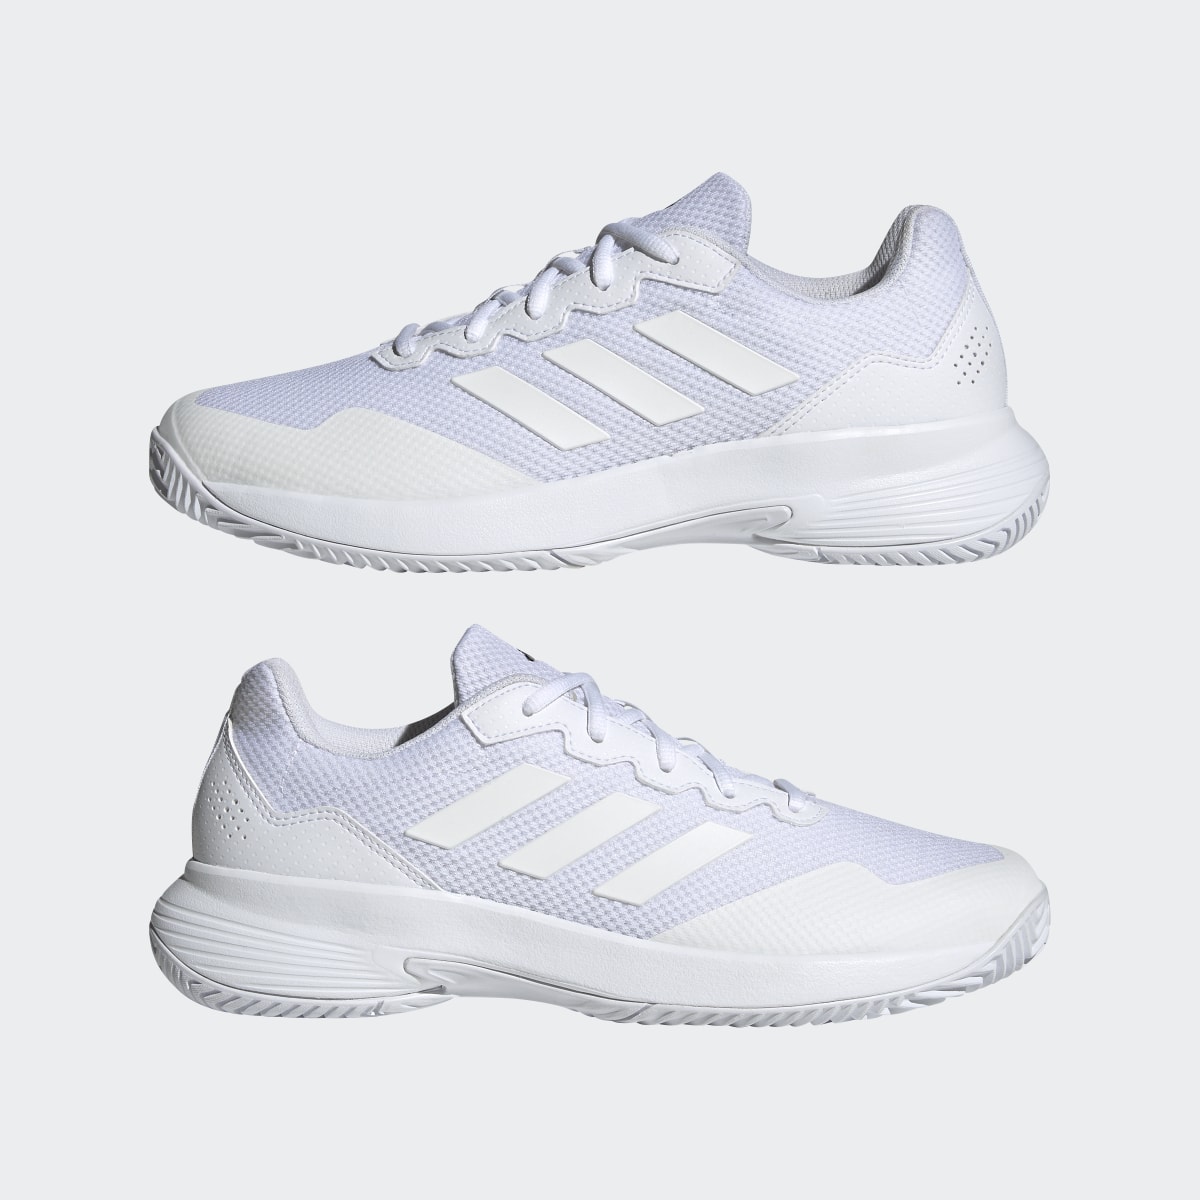 Adidas Gamecourt 2.0 Tenis Ayakkabısı. 11